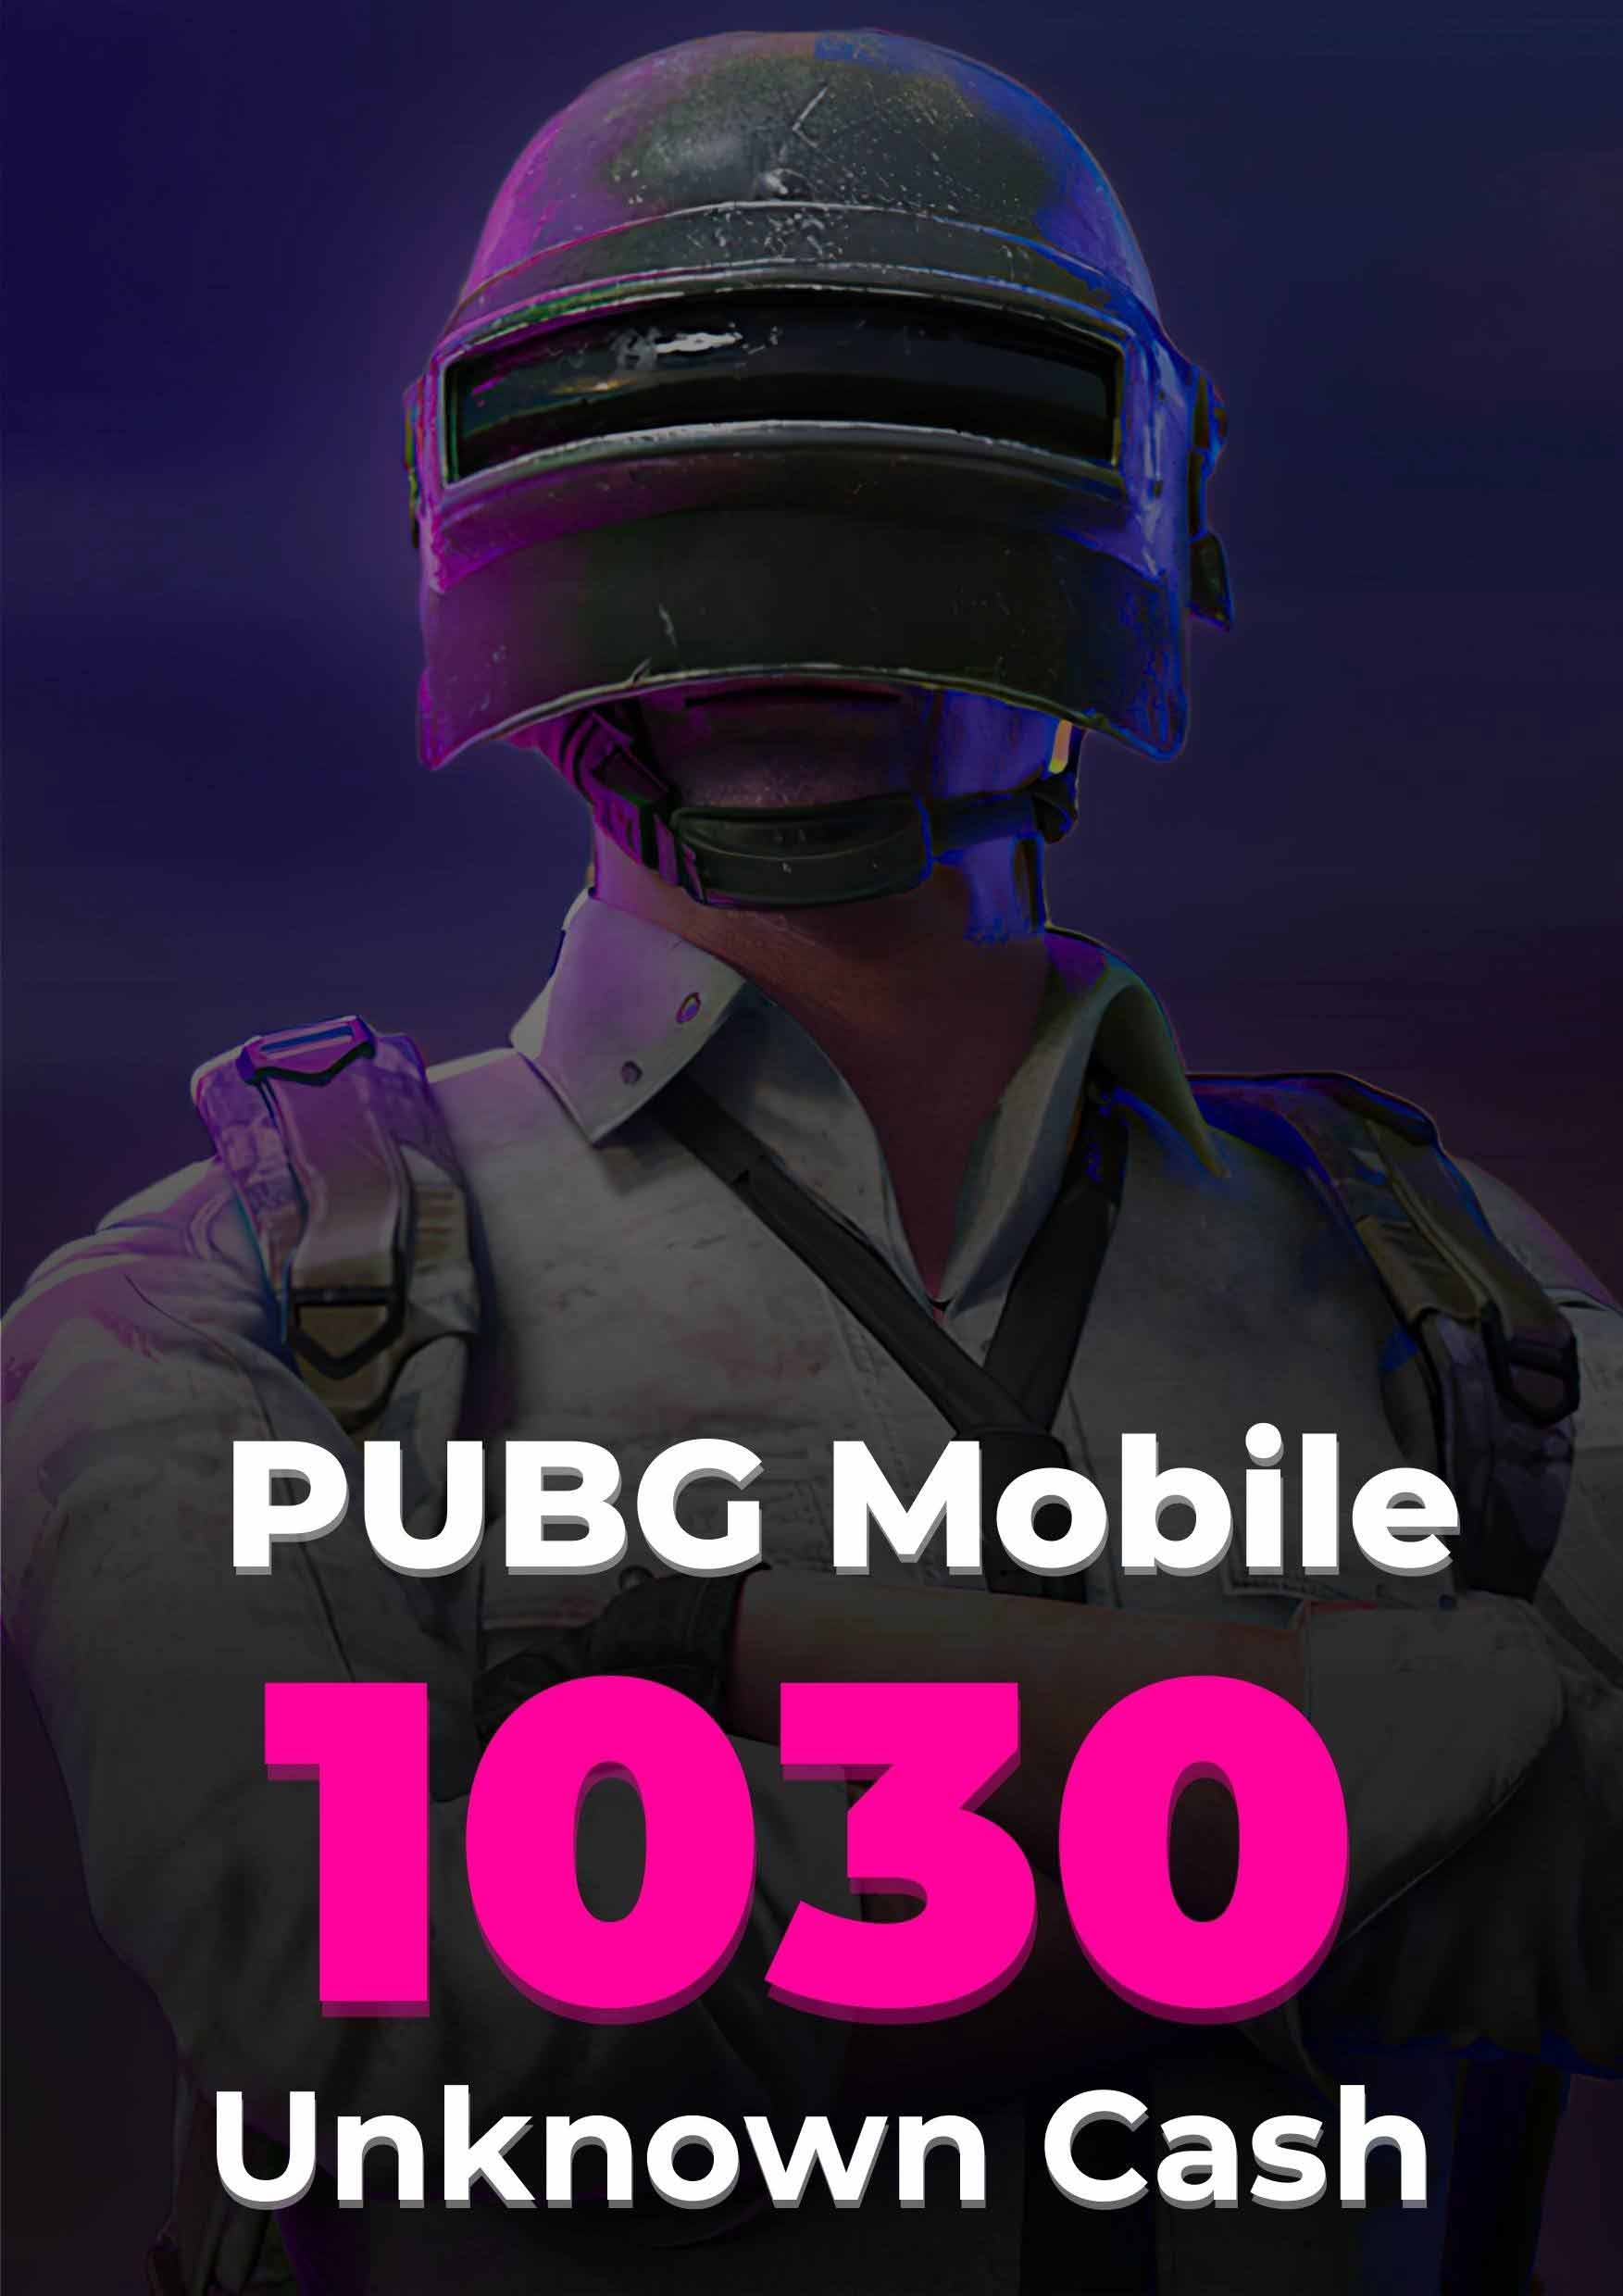 PUBG Mobile 1030 UC